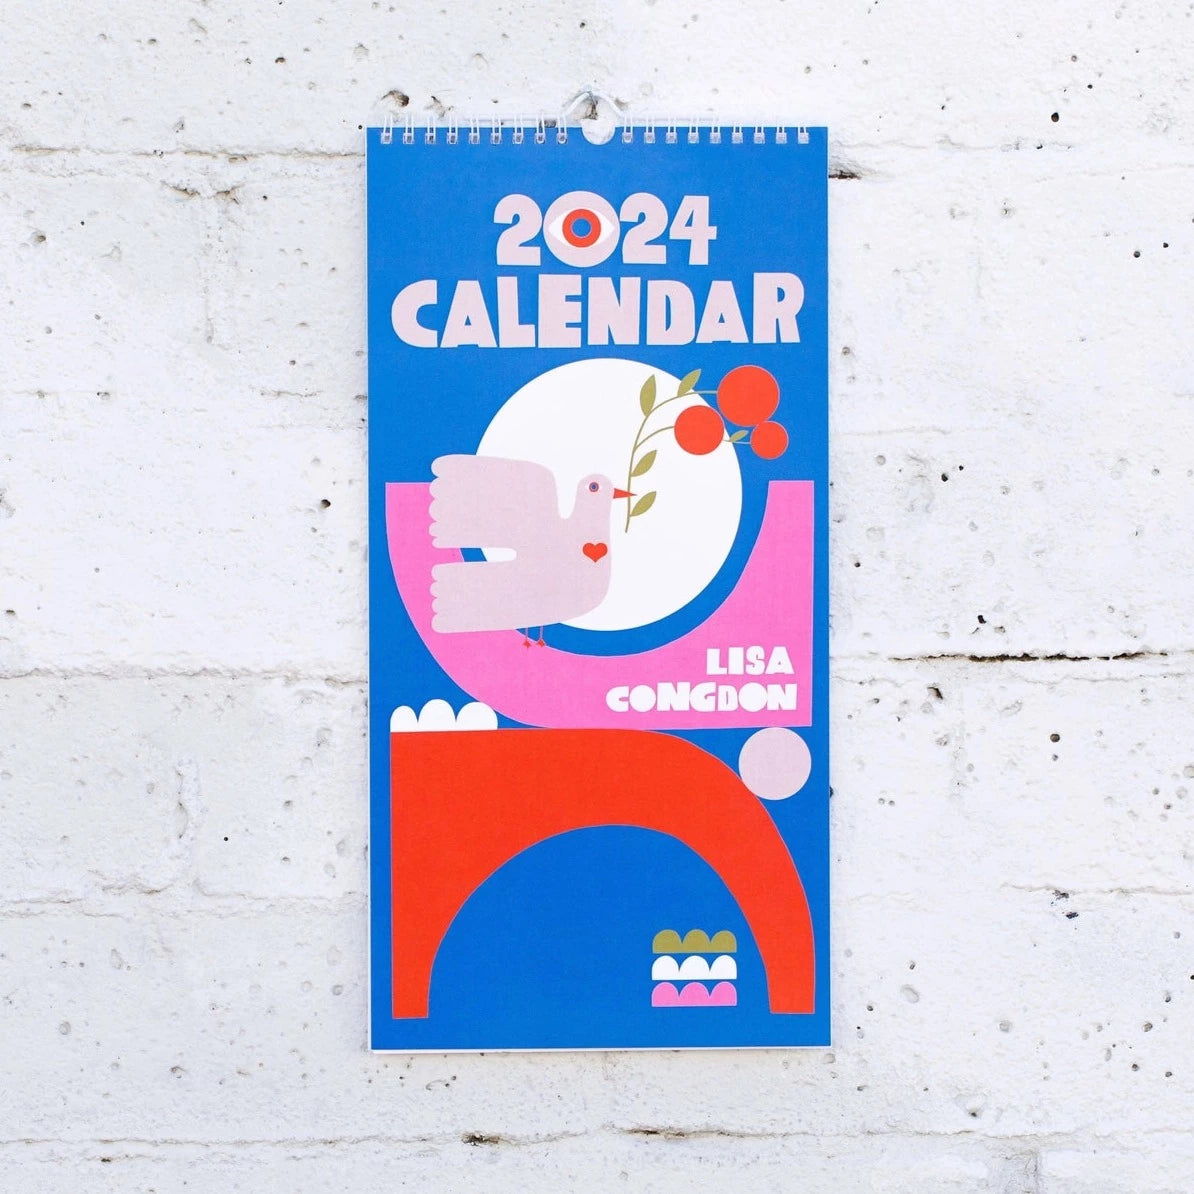 2024 Slim Wall Calendar By Lisa Congdon